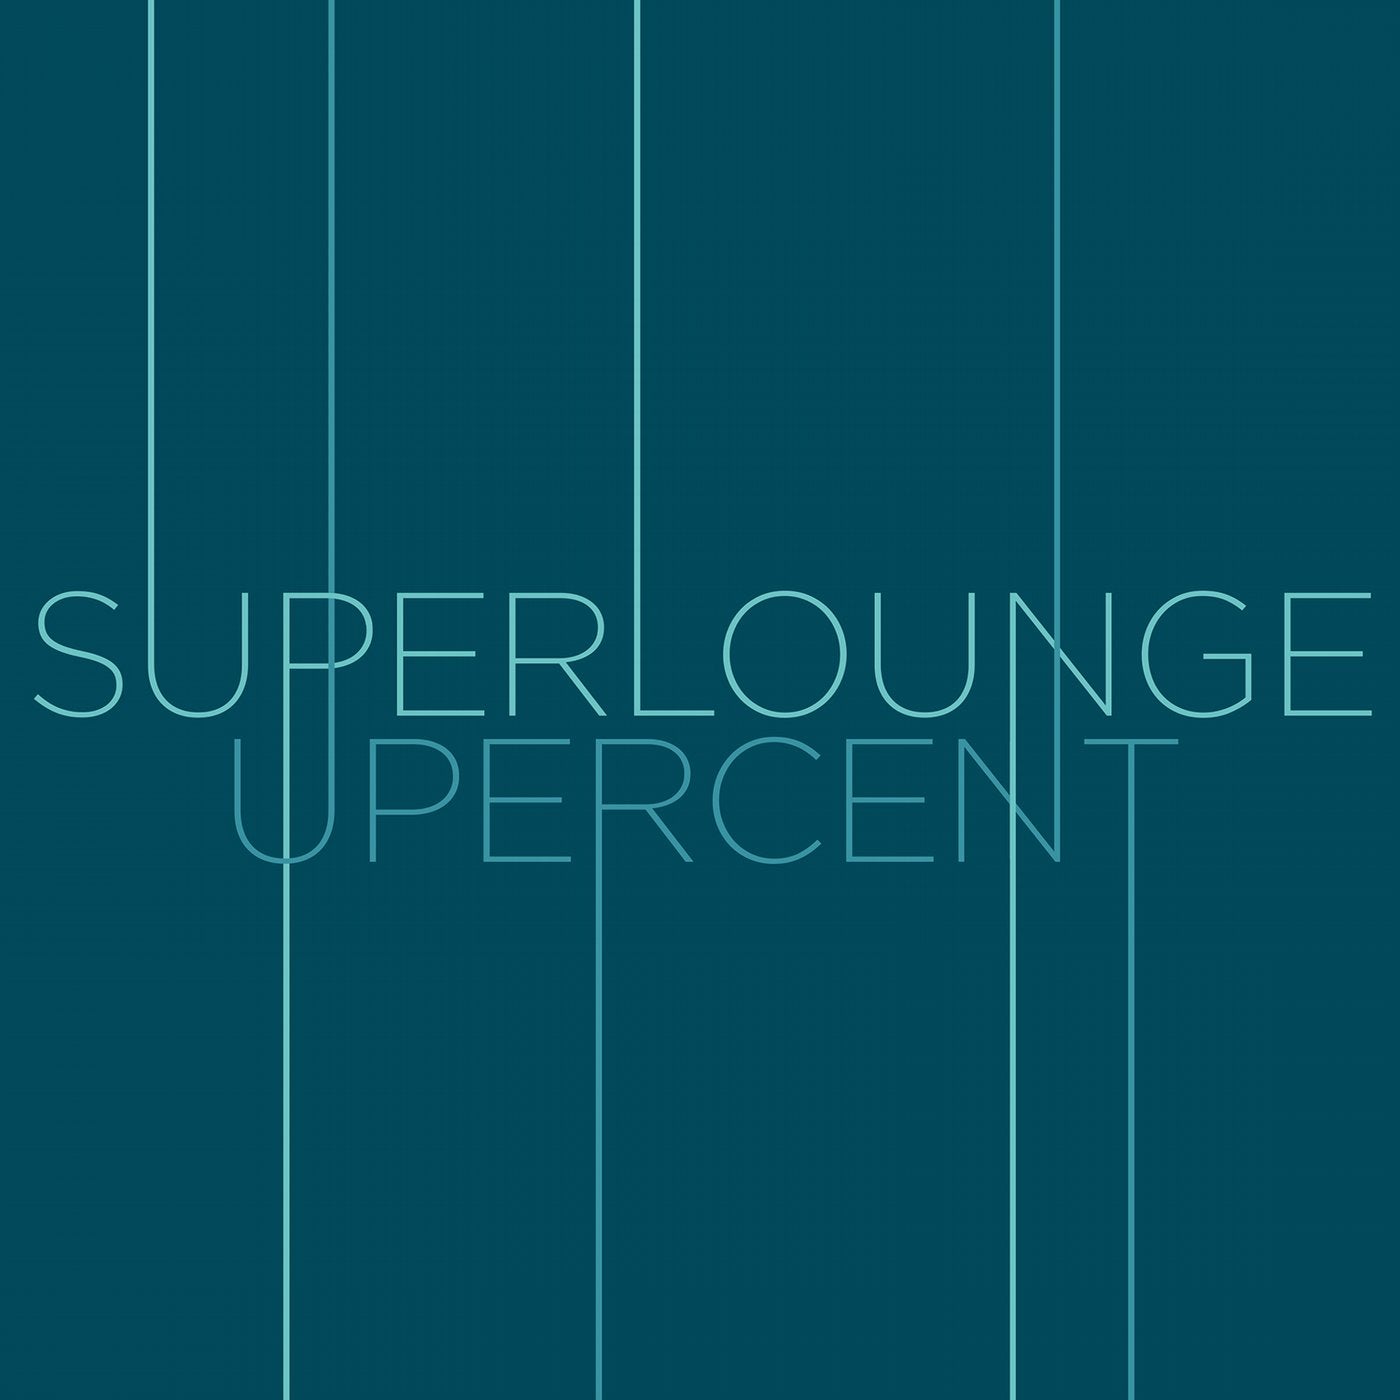 Superlounge + Upercent